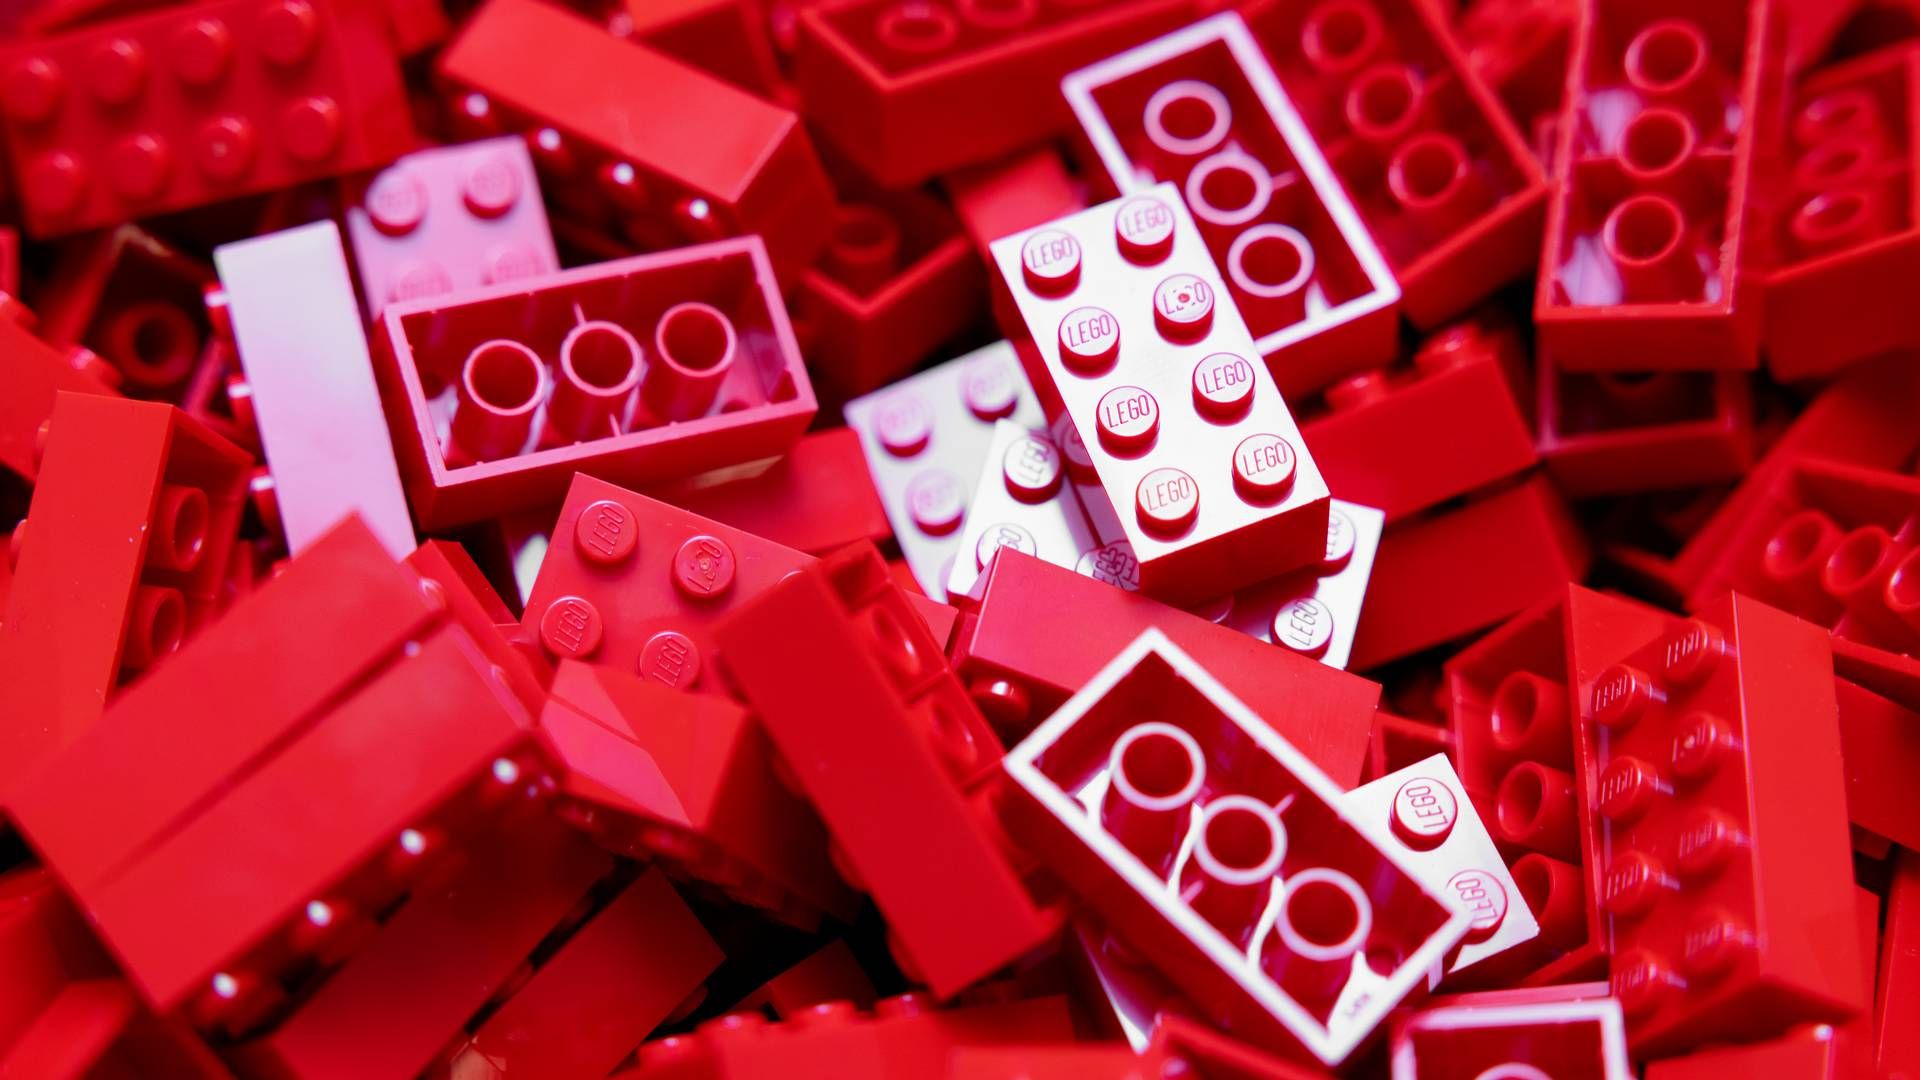 Den omtalte legoklods, som nyder designbeskyttelse, er en tyndklodsmed fire knopper på midten. | Foto: Thomas Borberg